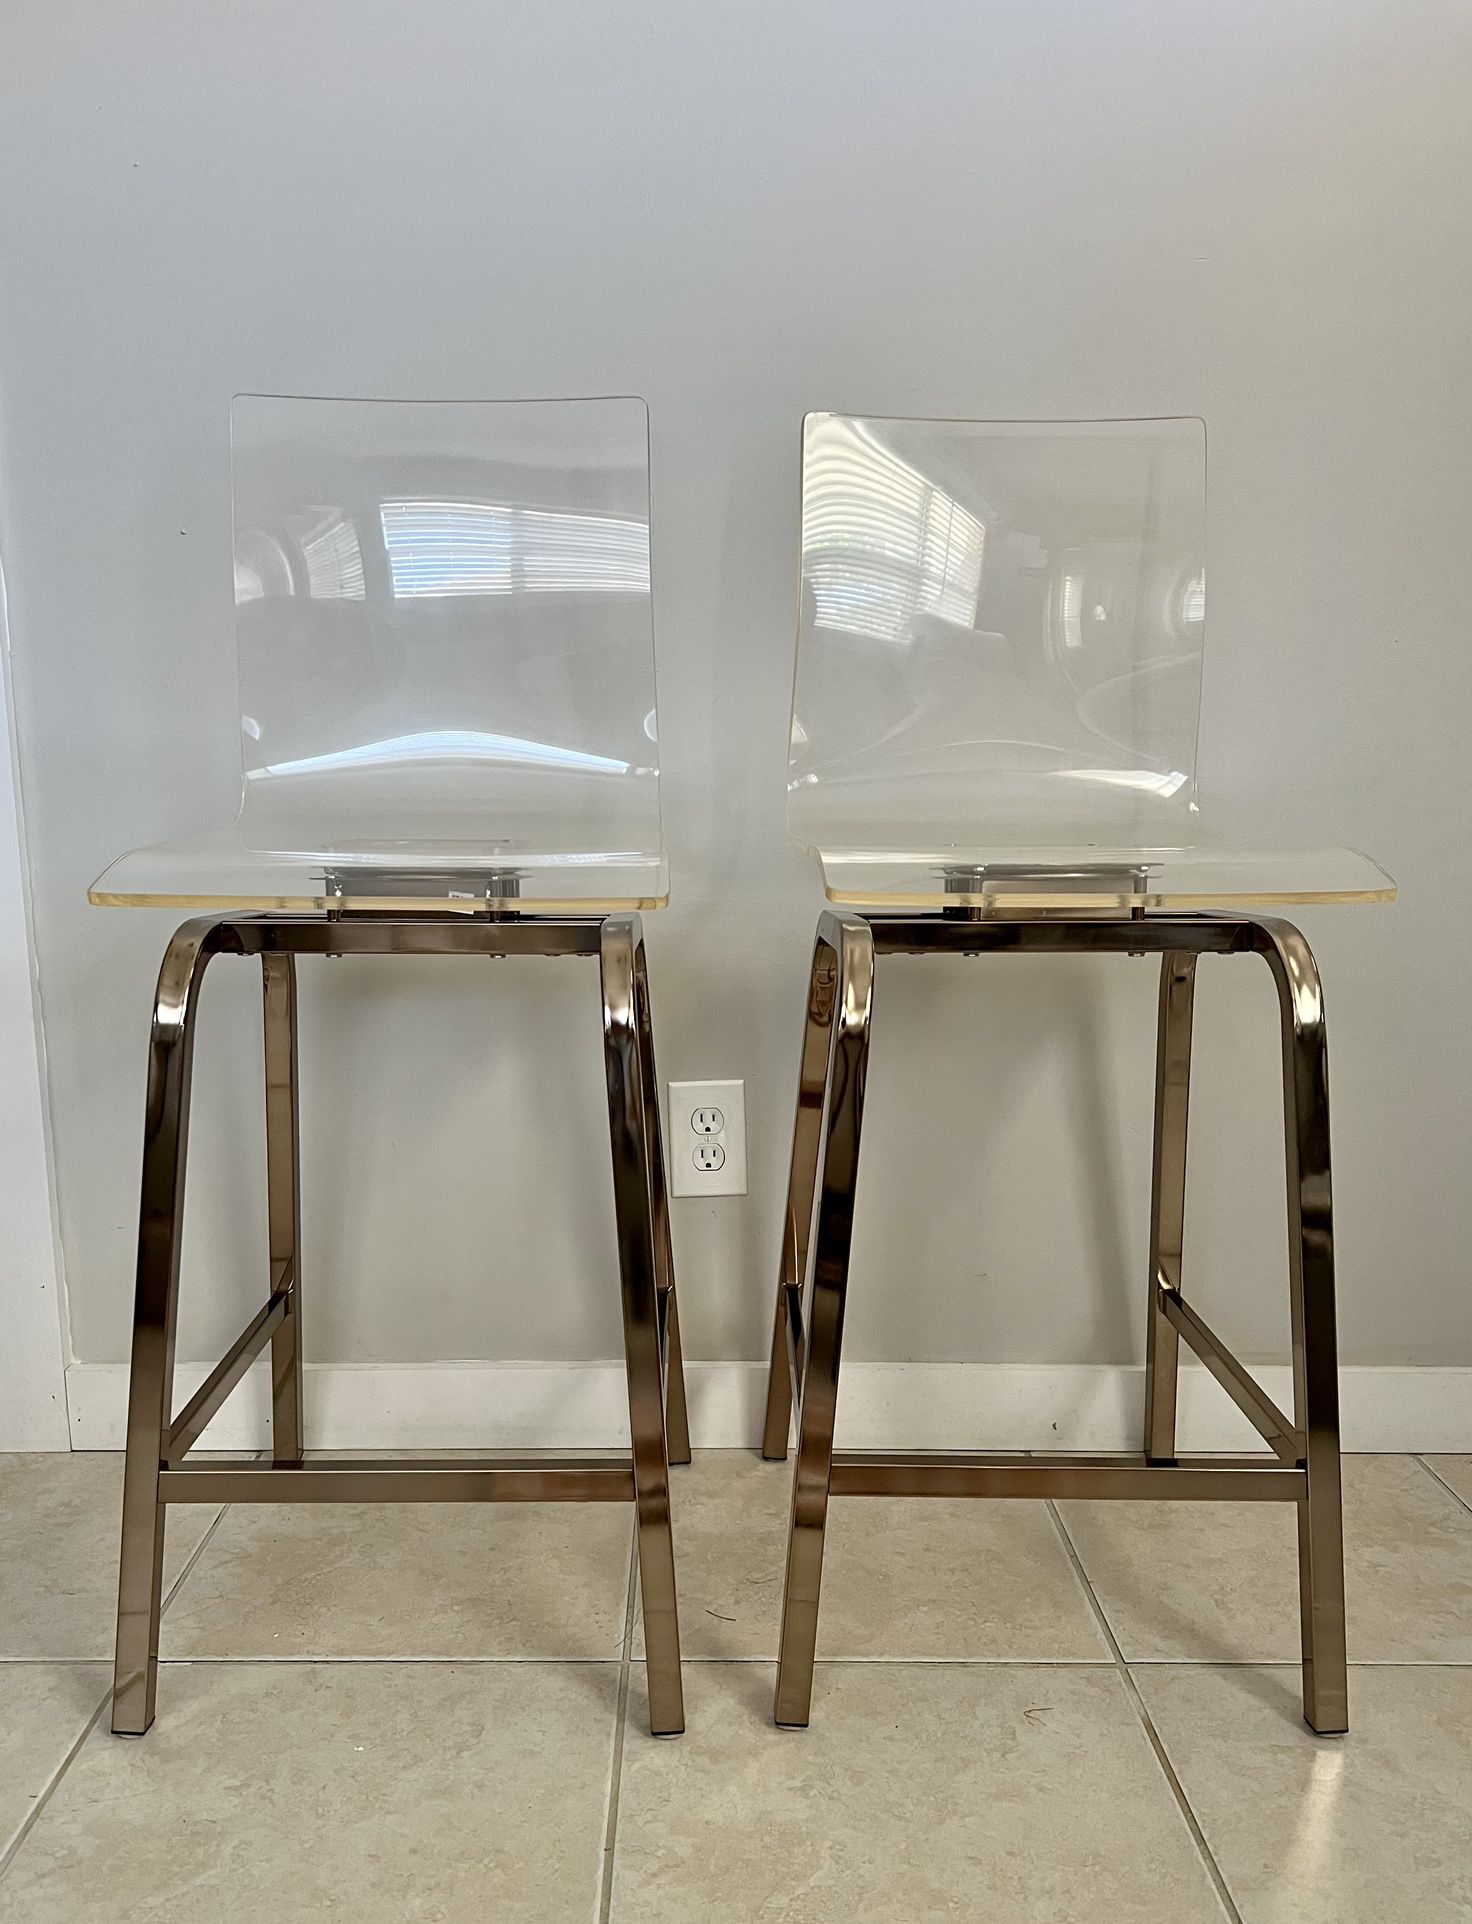 HomeSullivan Acrylic & Gold Swivel Chairs